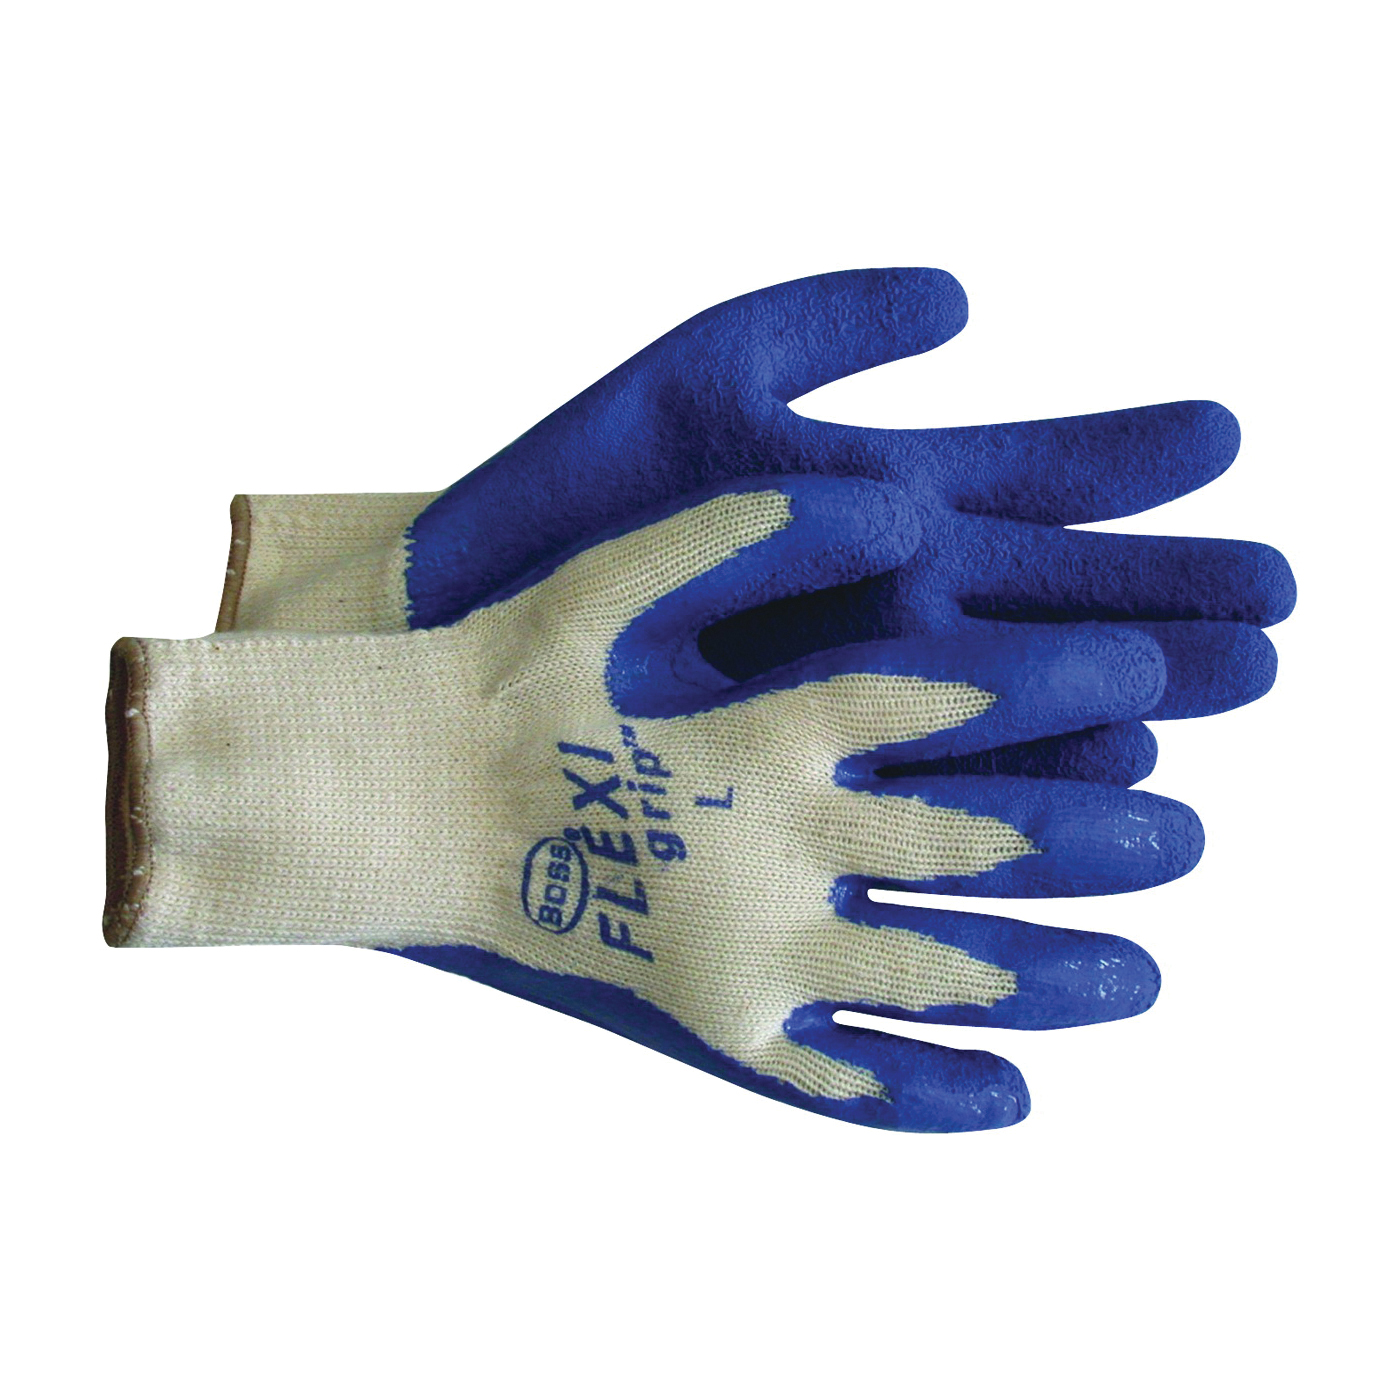 8426XL Ergonomic Protective Gloves, XL, Knit Wrist Cuff, Latex Coating, Blue